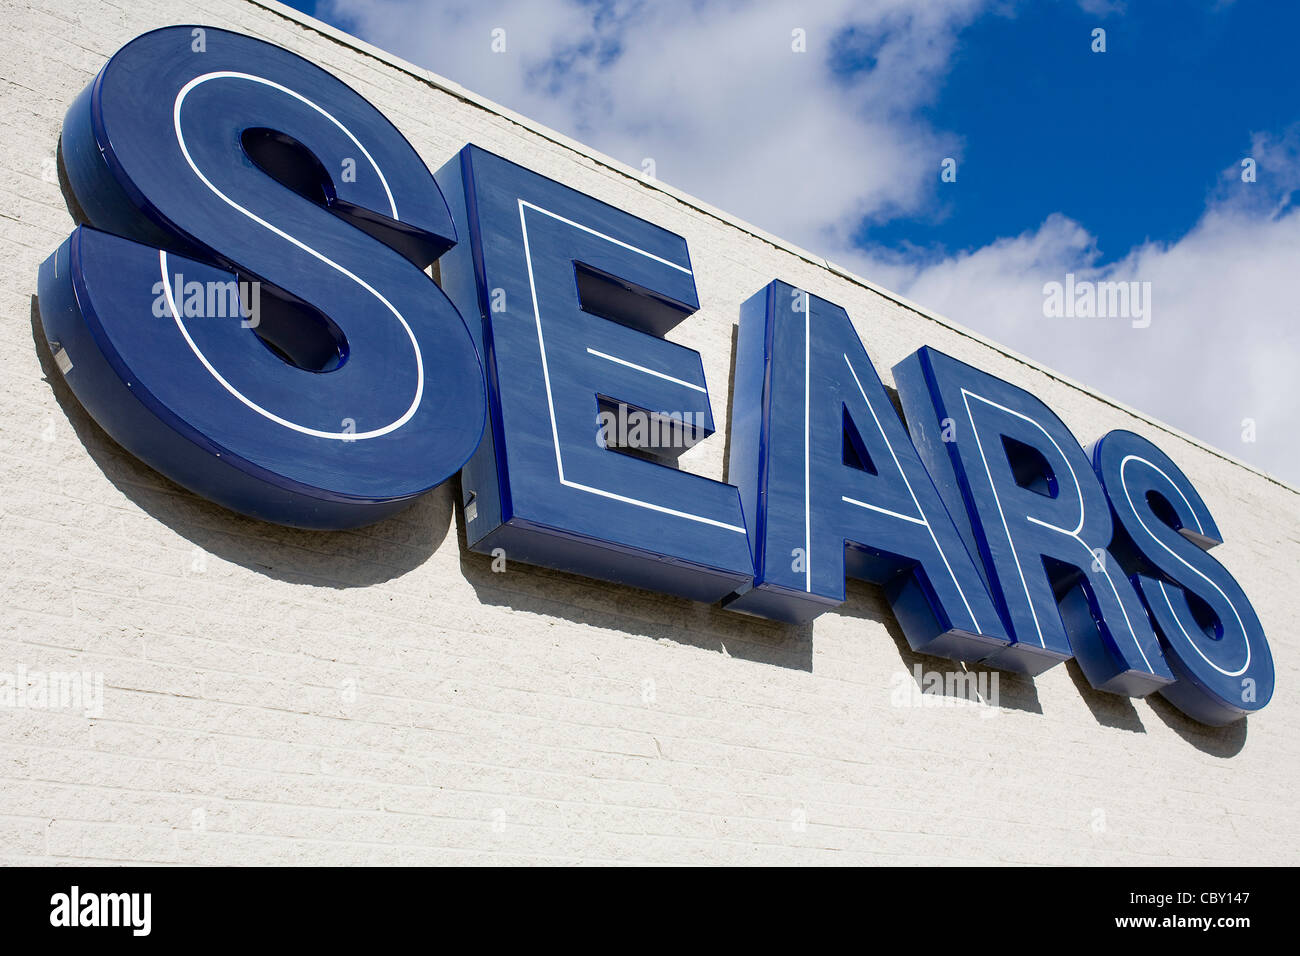 Ladengeschäft Sears. Stockfoto